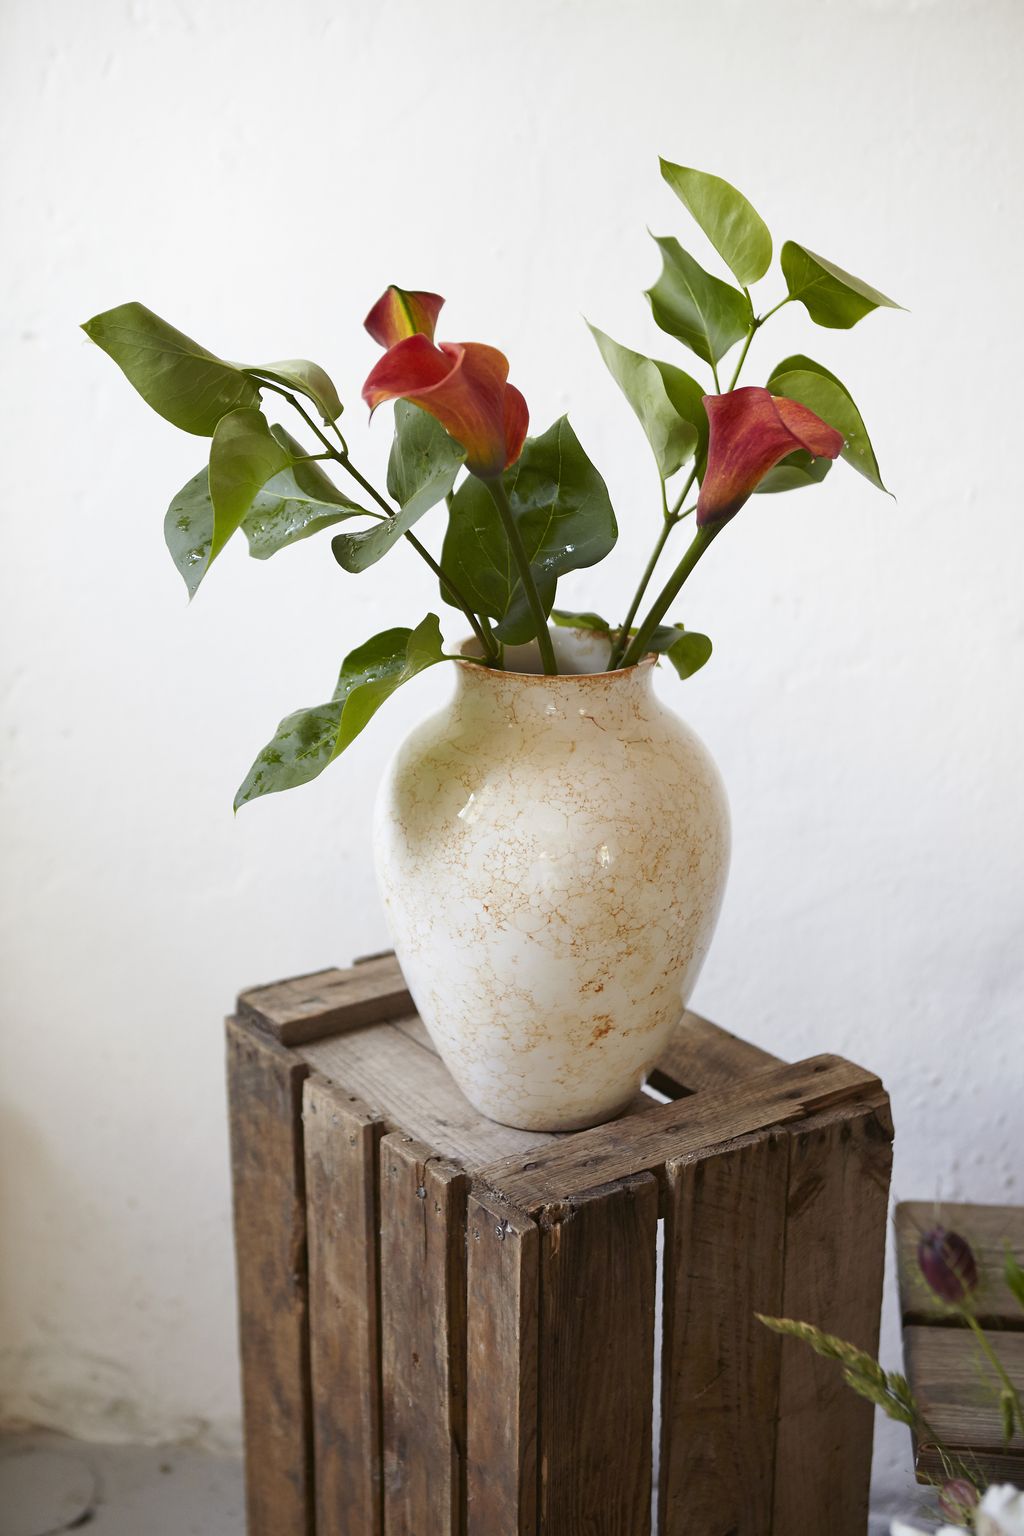 Knabstrup Keramik花瓶Natura H 27厘米，白/棕色